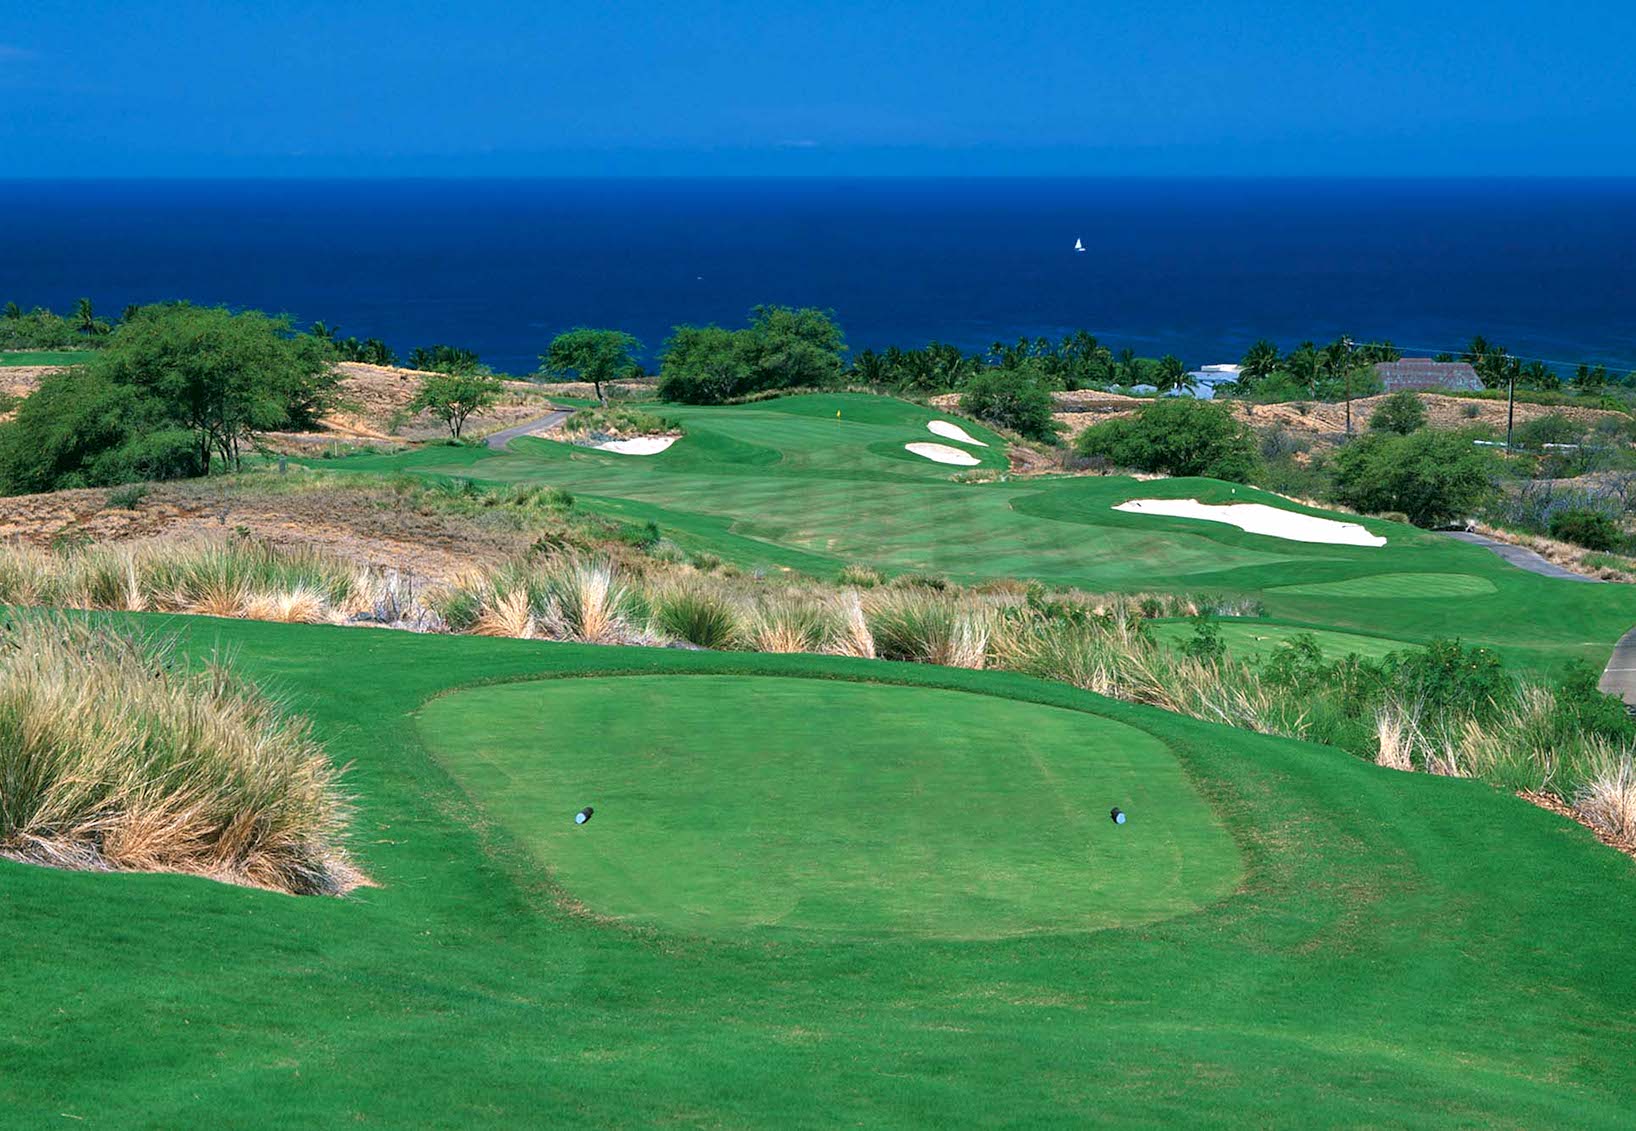 Wailua Golf Course - Municipal golf course in Hawaii